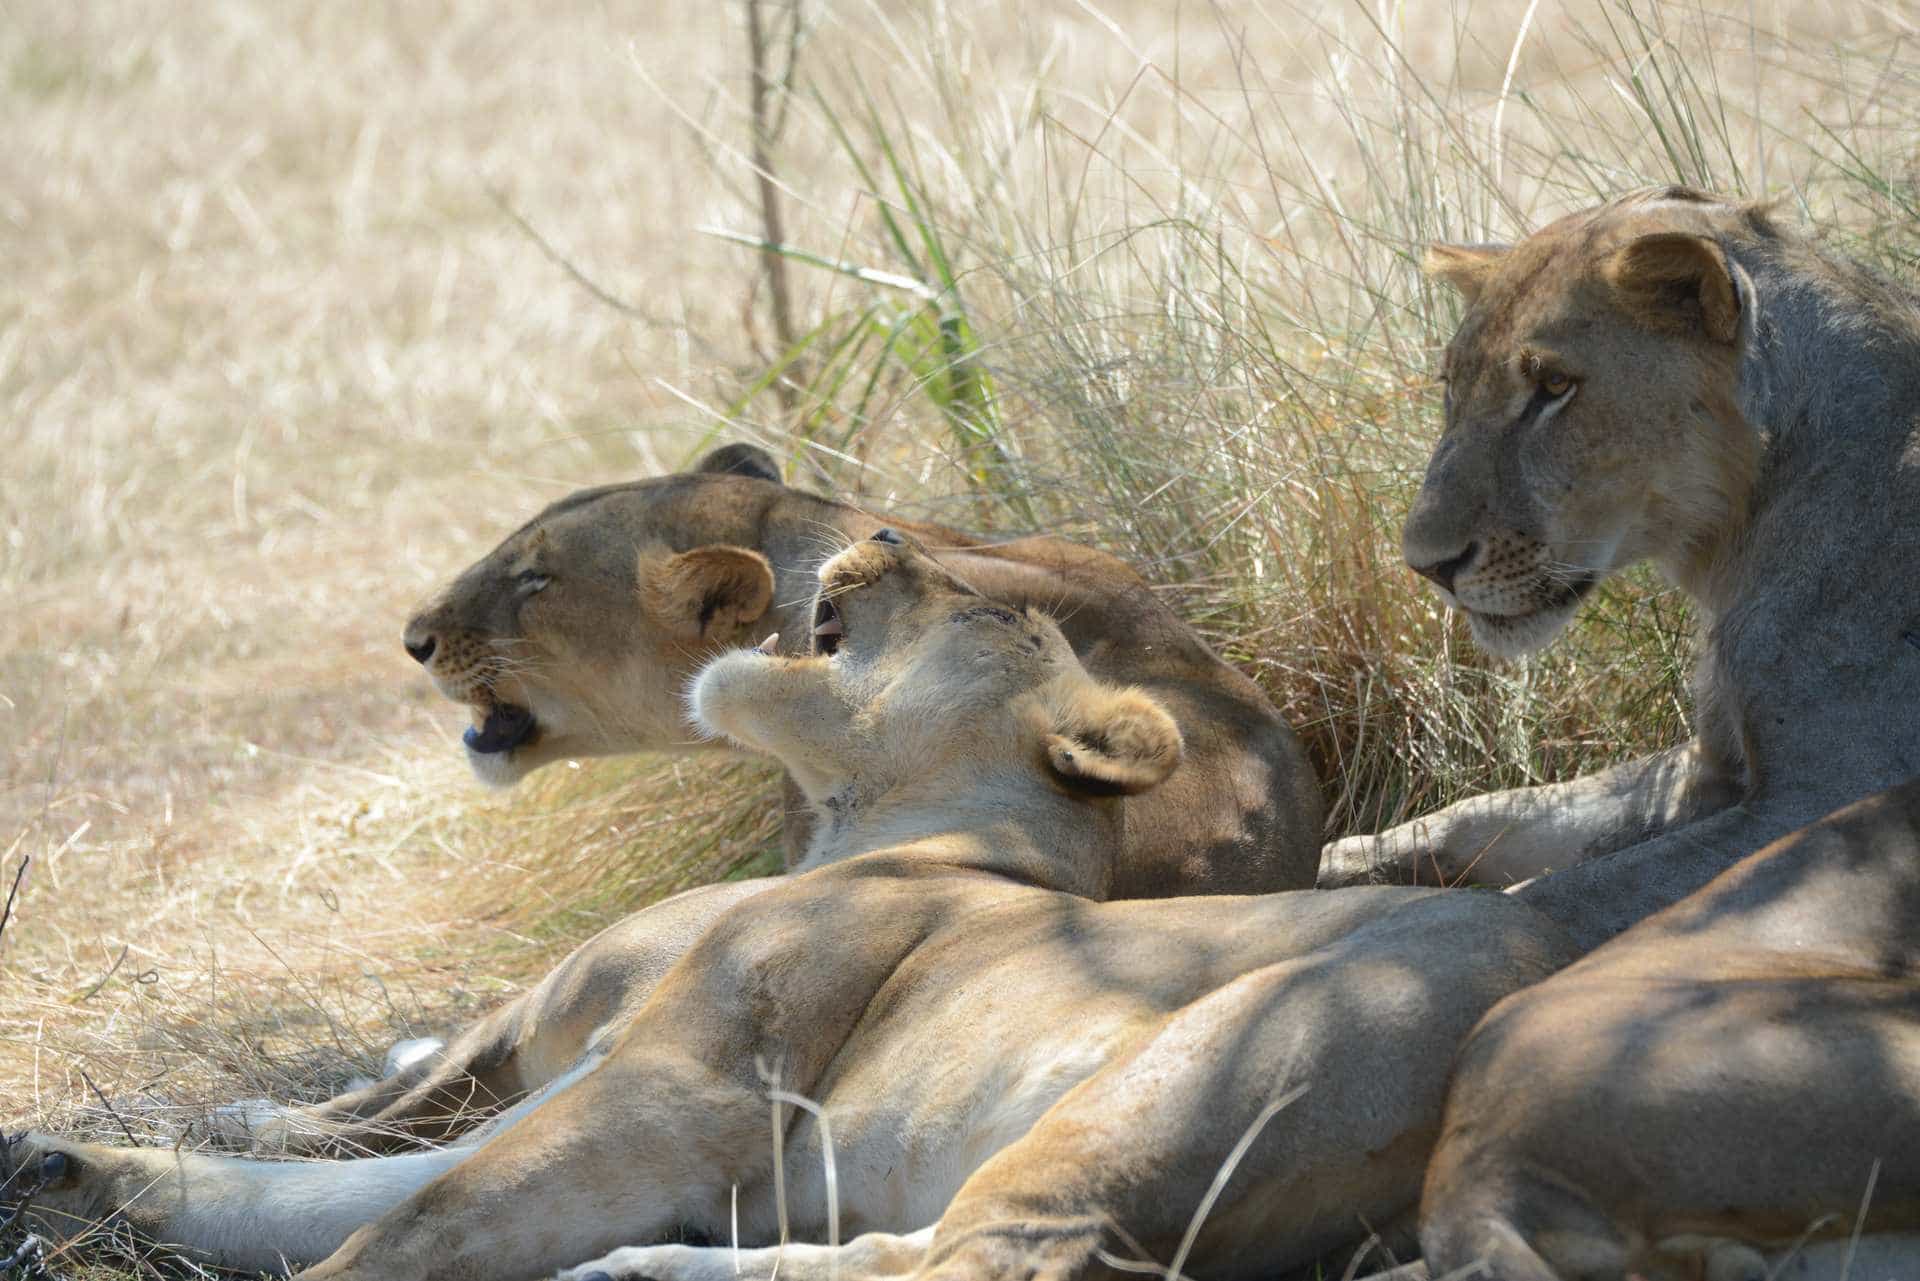 Safari tours and holidays in Tanzania